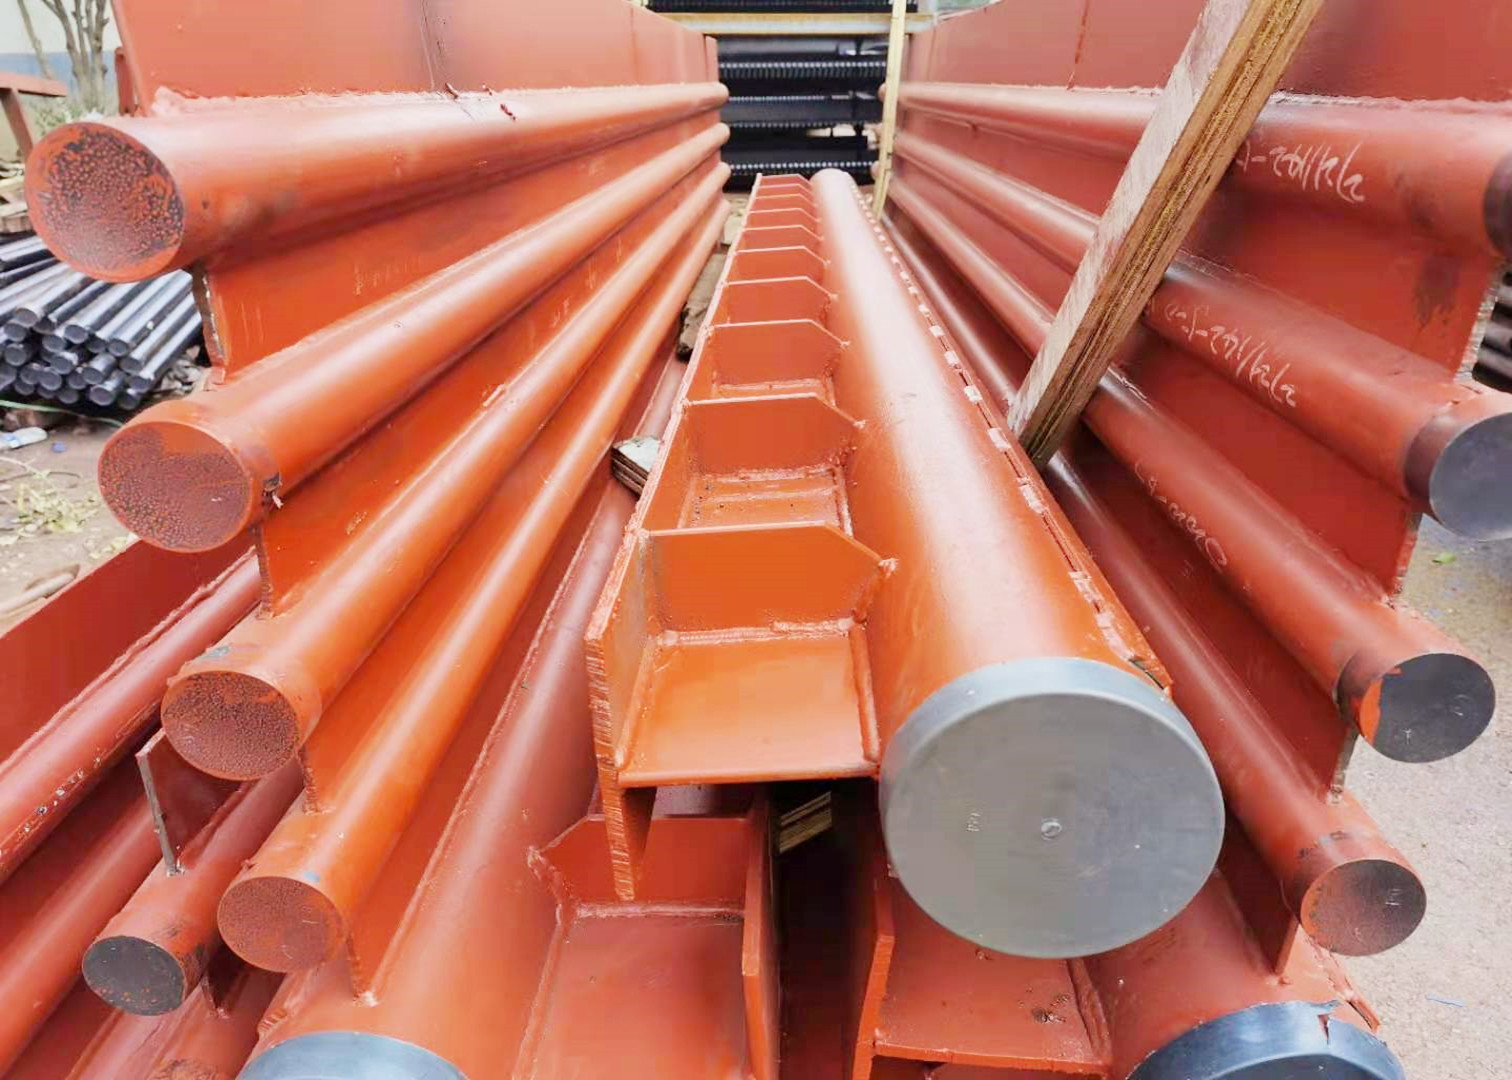 Boiler Components Steam Boiler Header Manifolds for Boiler Economizer Superheater Water Wall Tube